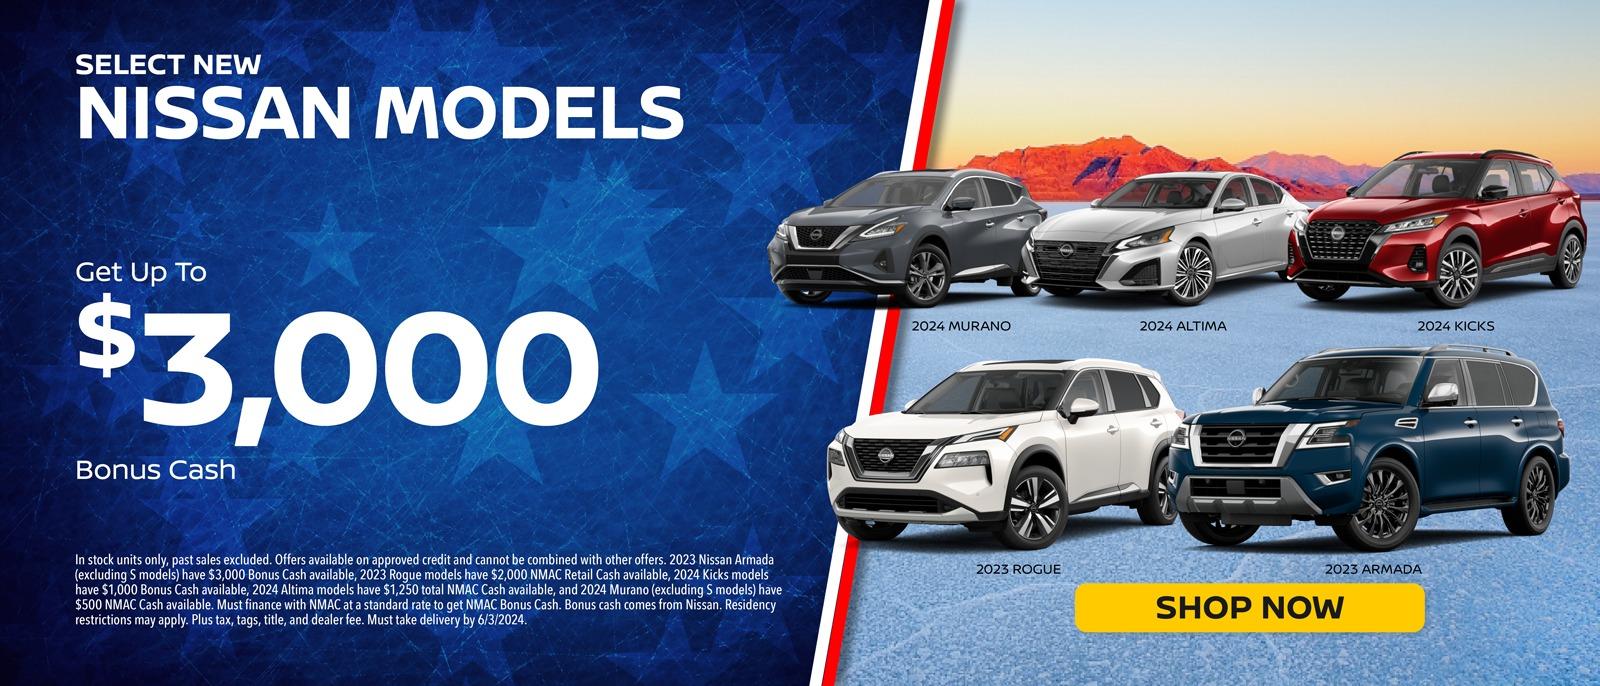 Select New Nissan Models